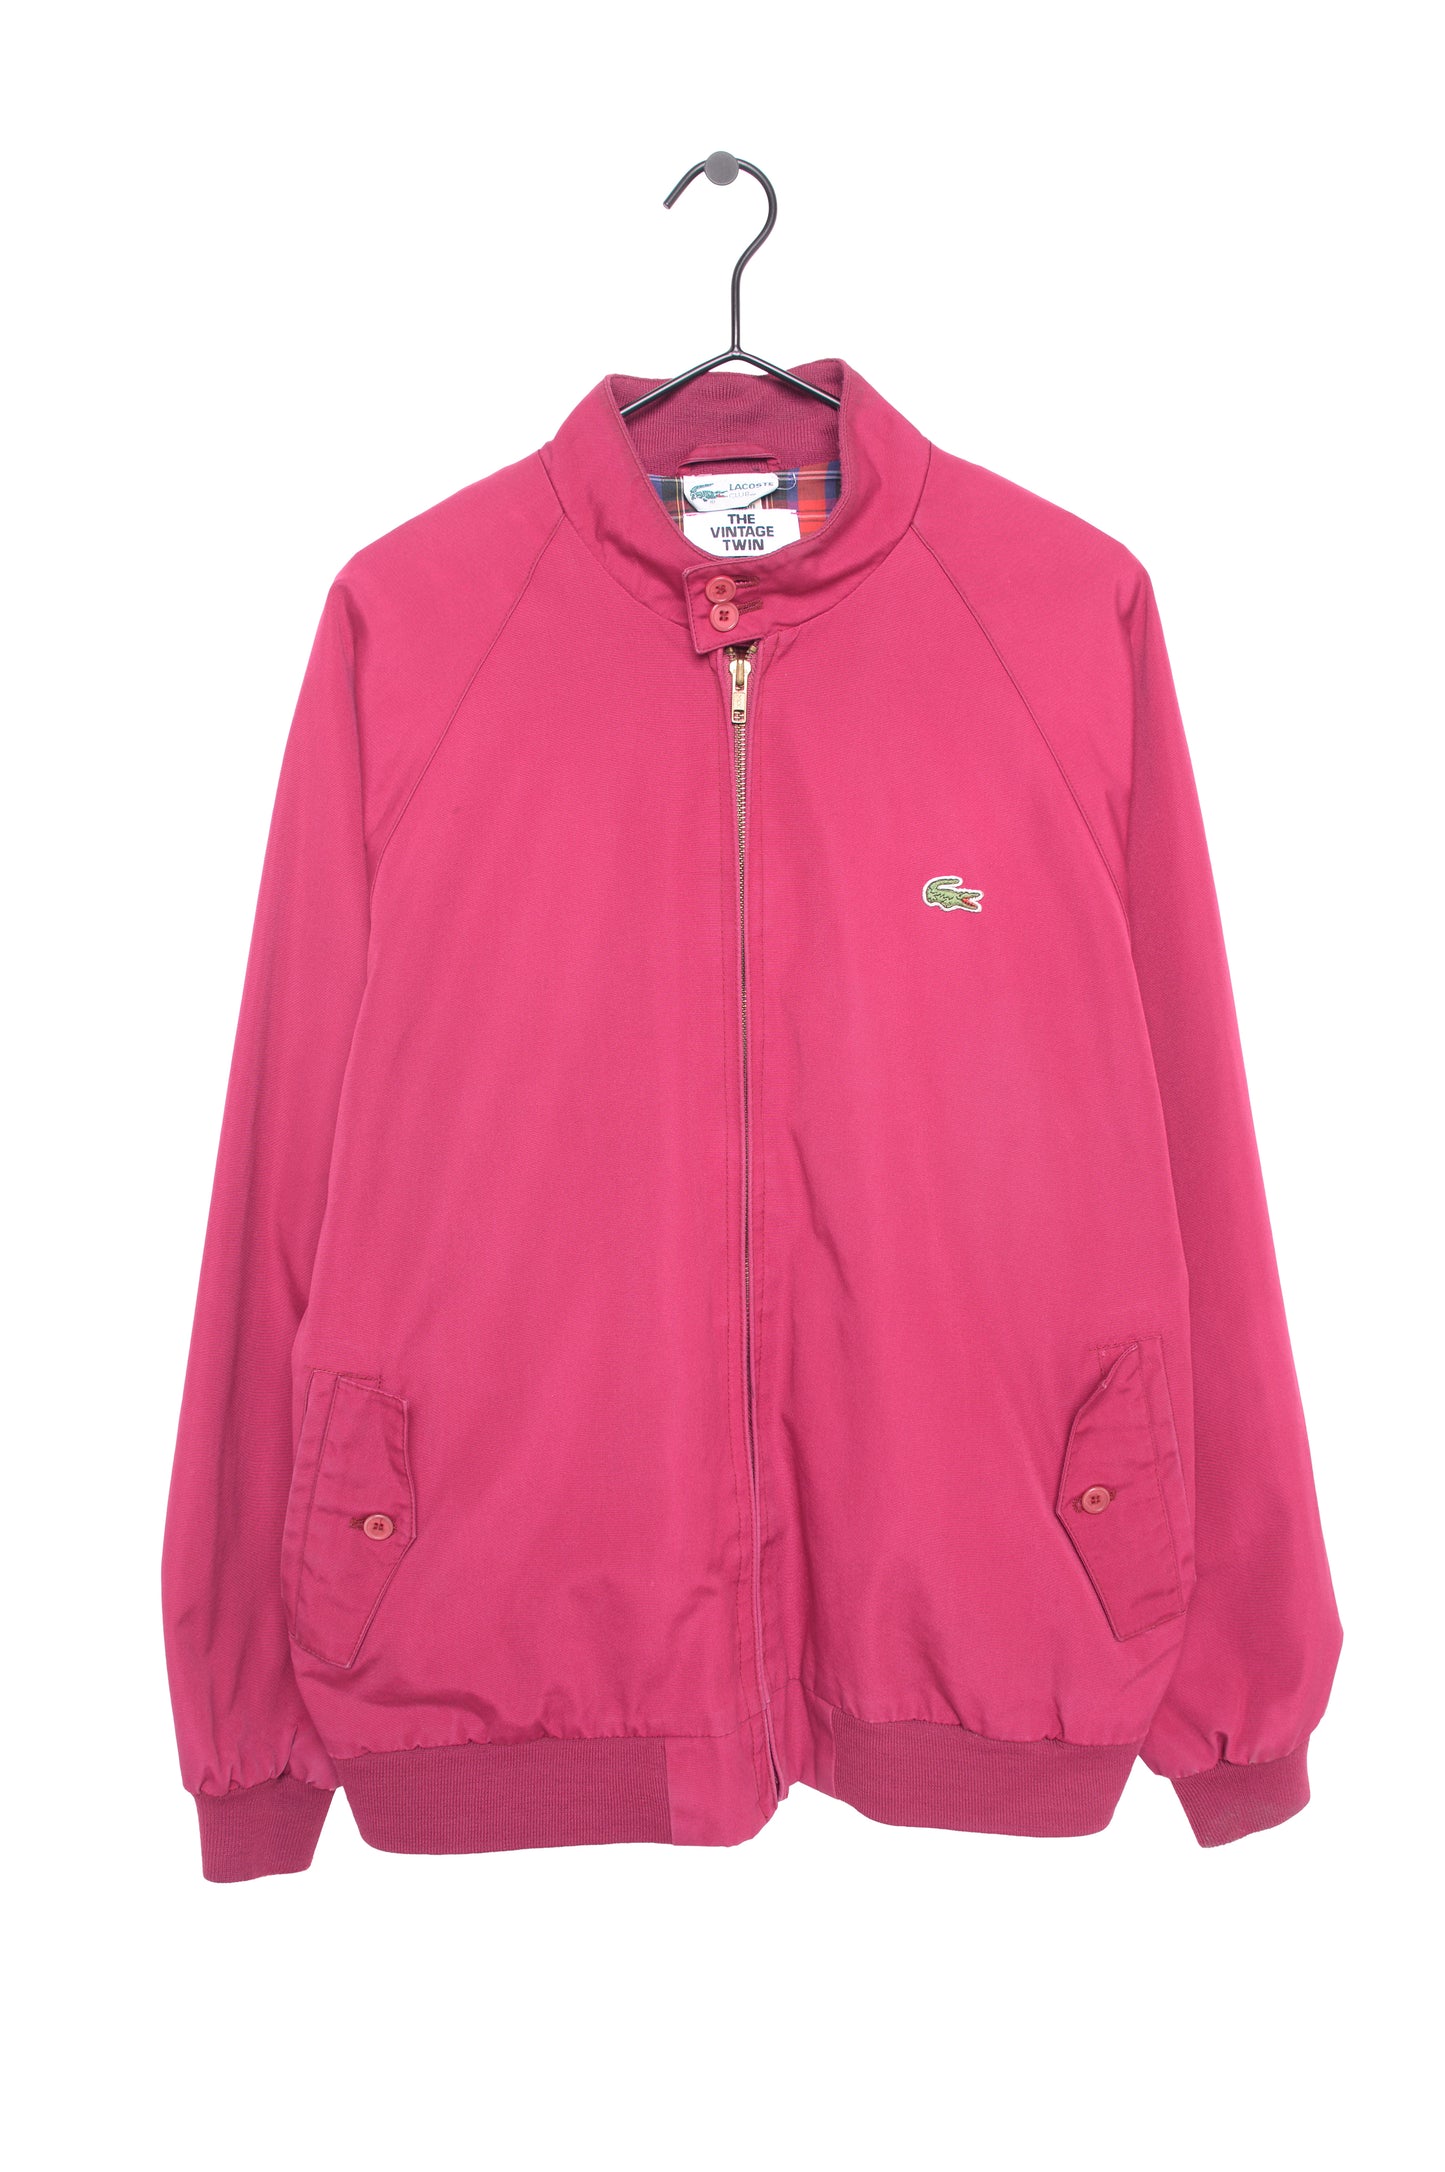 Pink Lacoste Golf Jacket